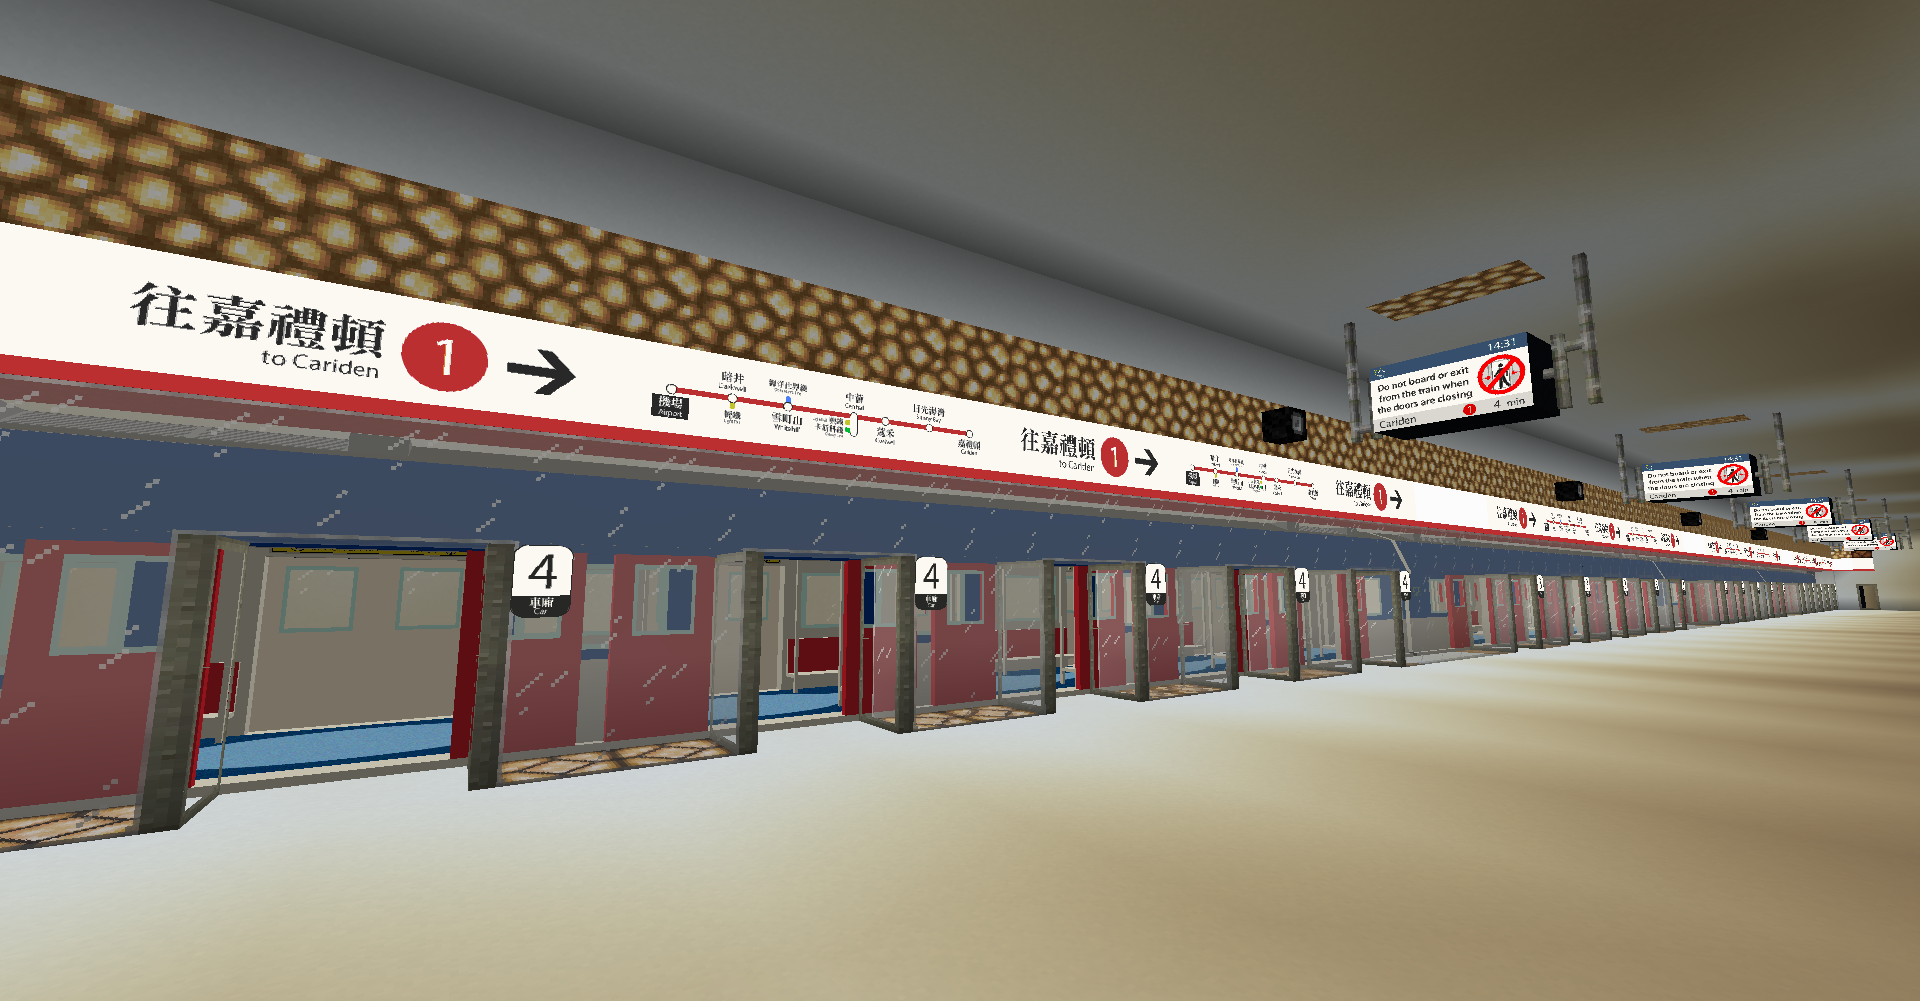 SCR Airport Station Platform 1